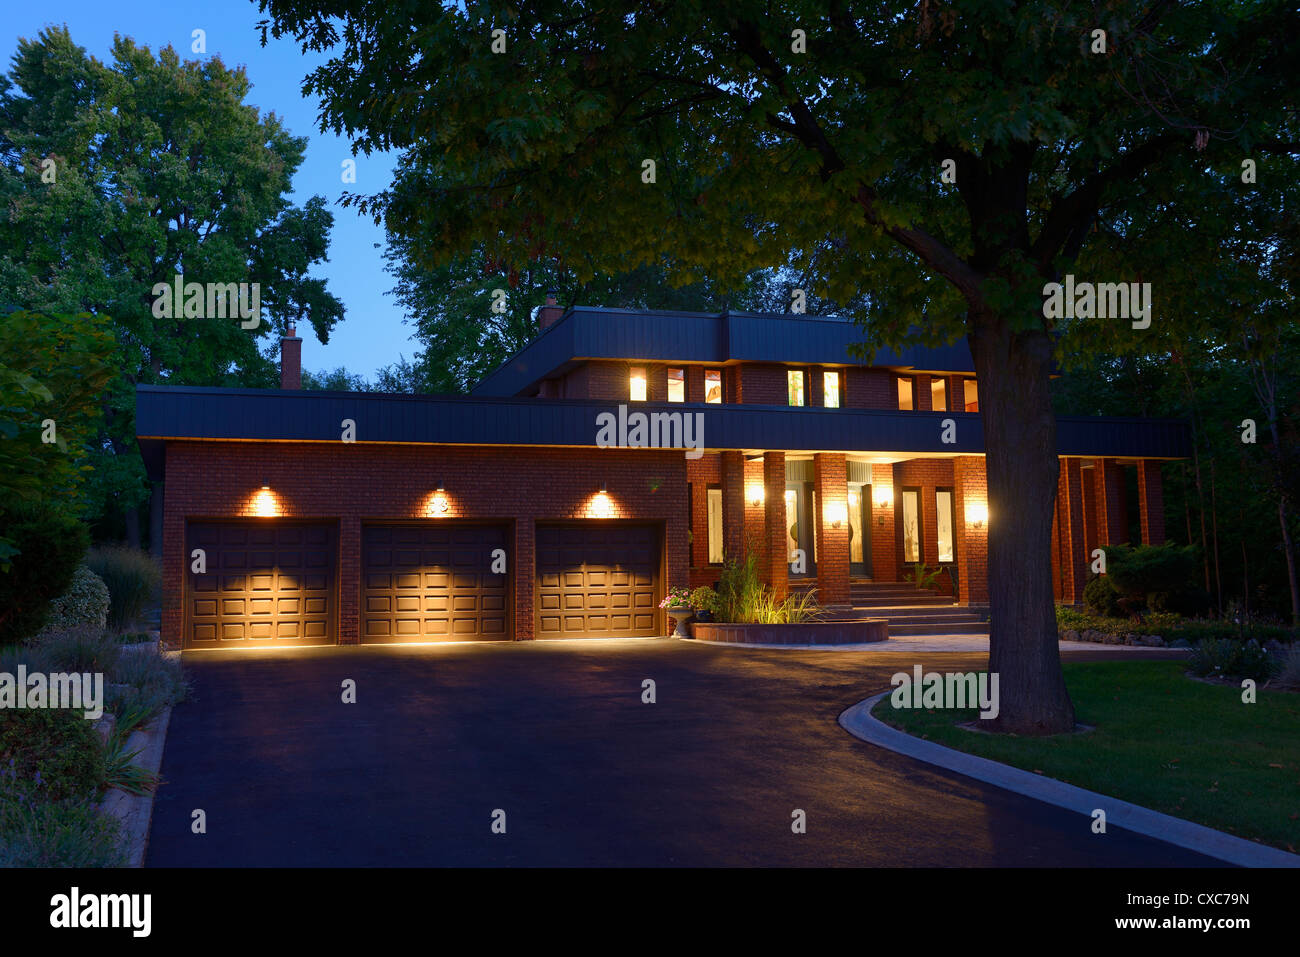 https://c8.alamy.com/comp/CXC79N/red-brick-house-with-circular-driveway-and-three-car-garage-at-twilight-CXC79N.jpg